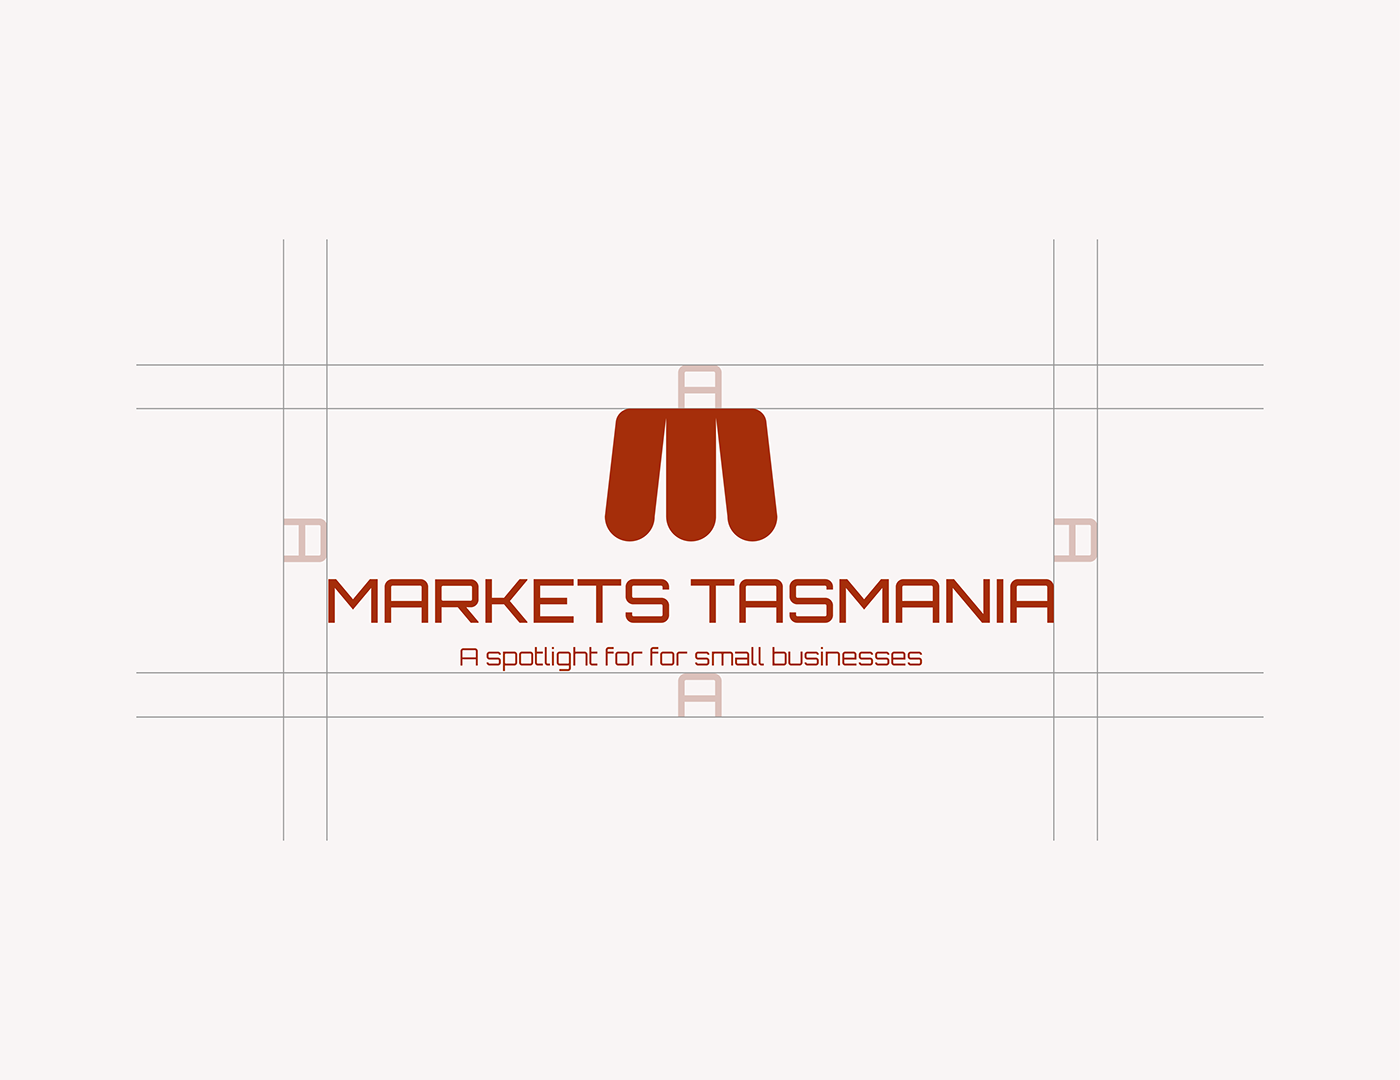 Markets Tasmania logo spacing guide